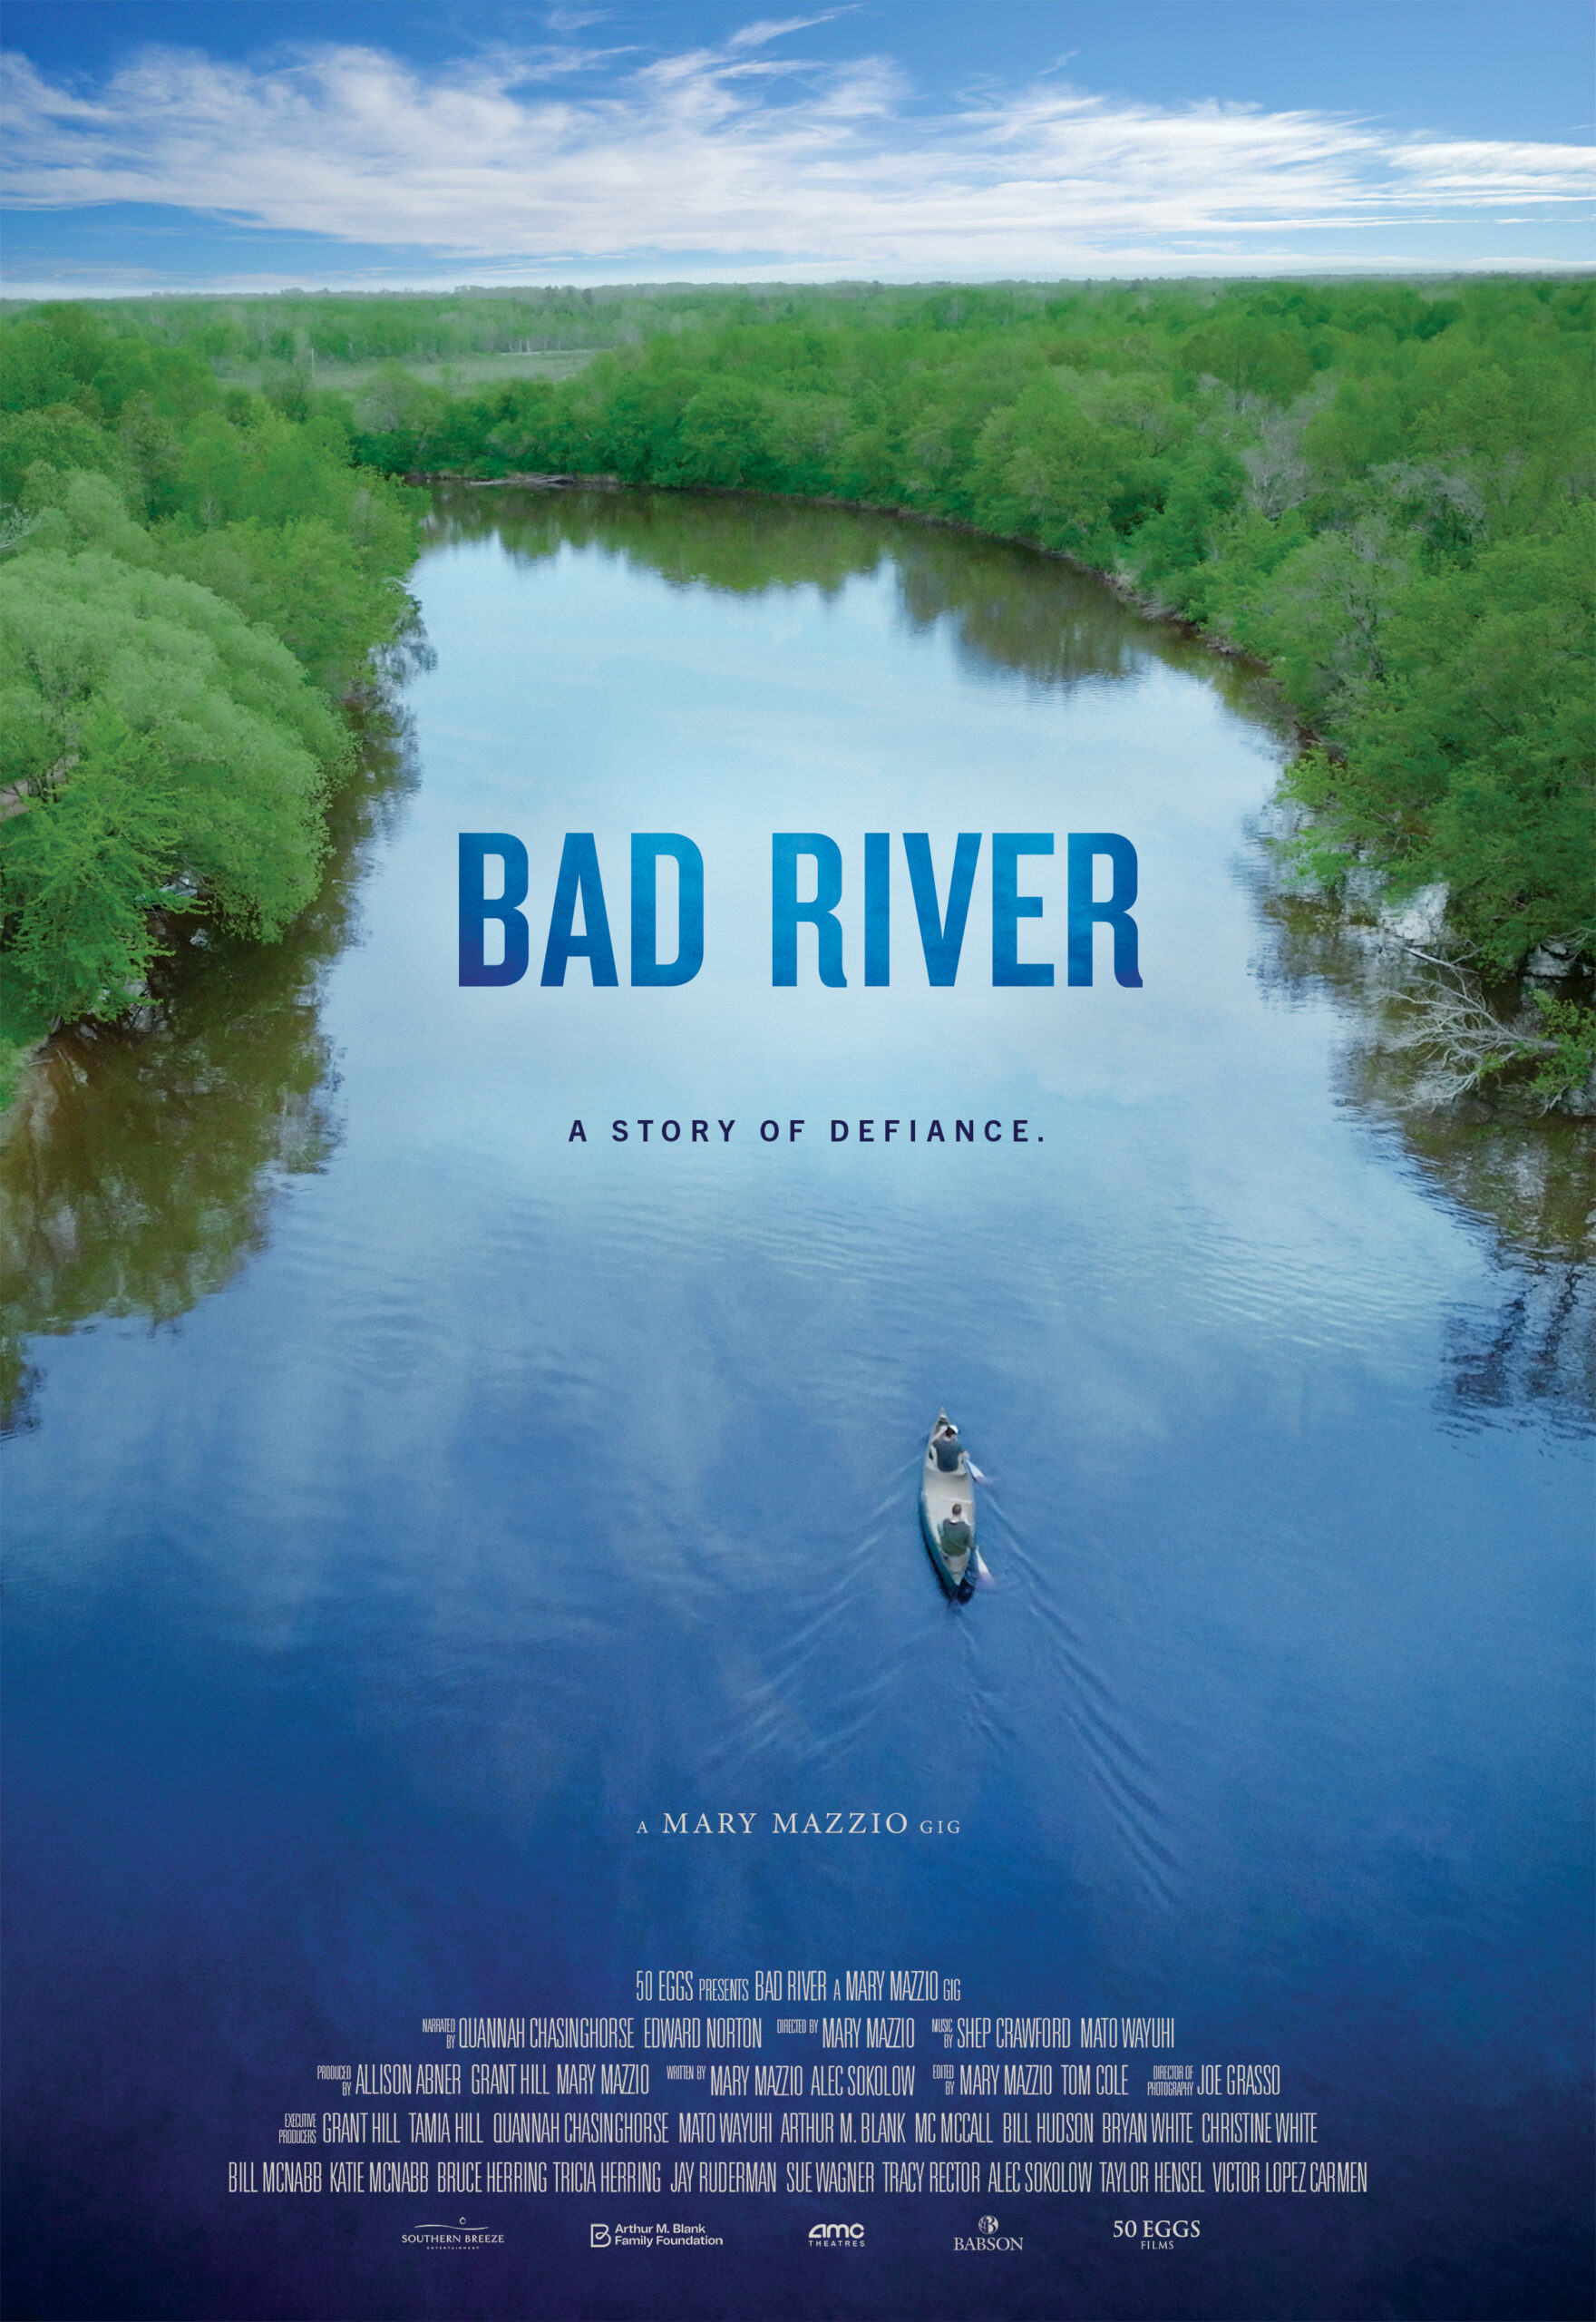 April 26, ‘Bad River’ Documentary